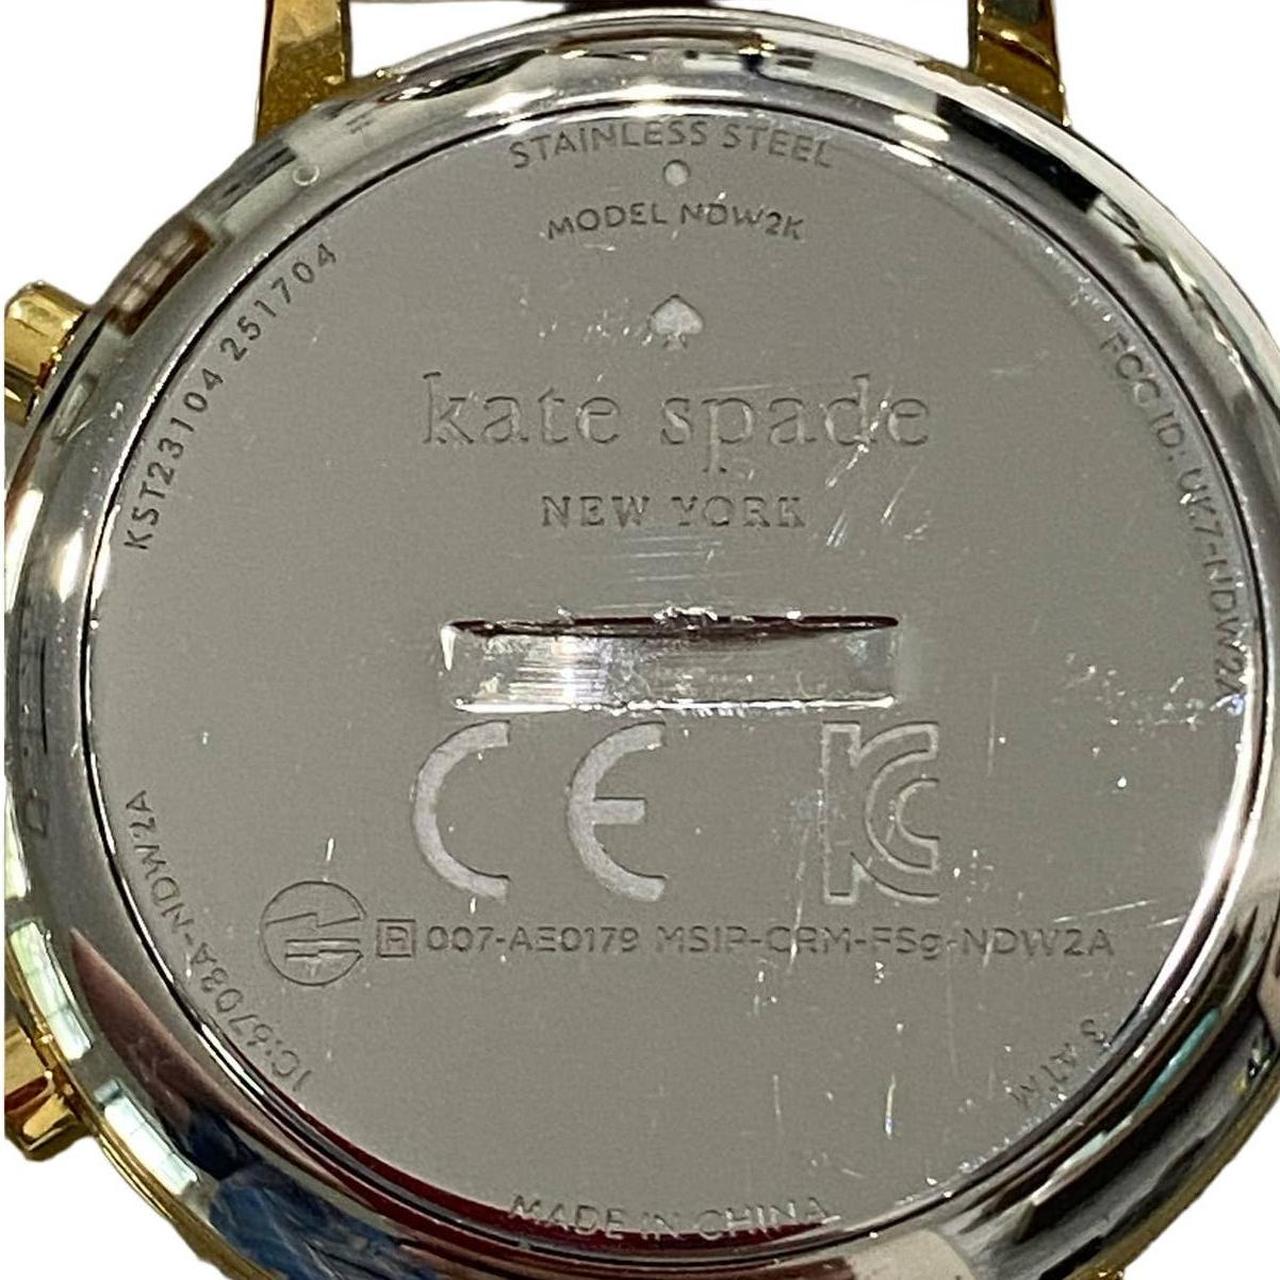 Gruen Quartz FSC 3285011 Watch - New Battery - Runs - White Face - Muli  Color Ba | eBay